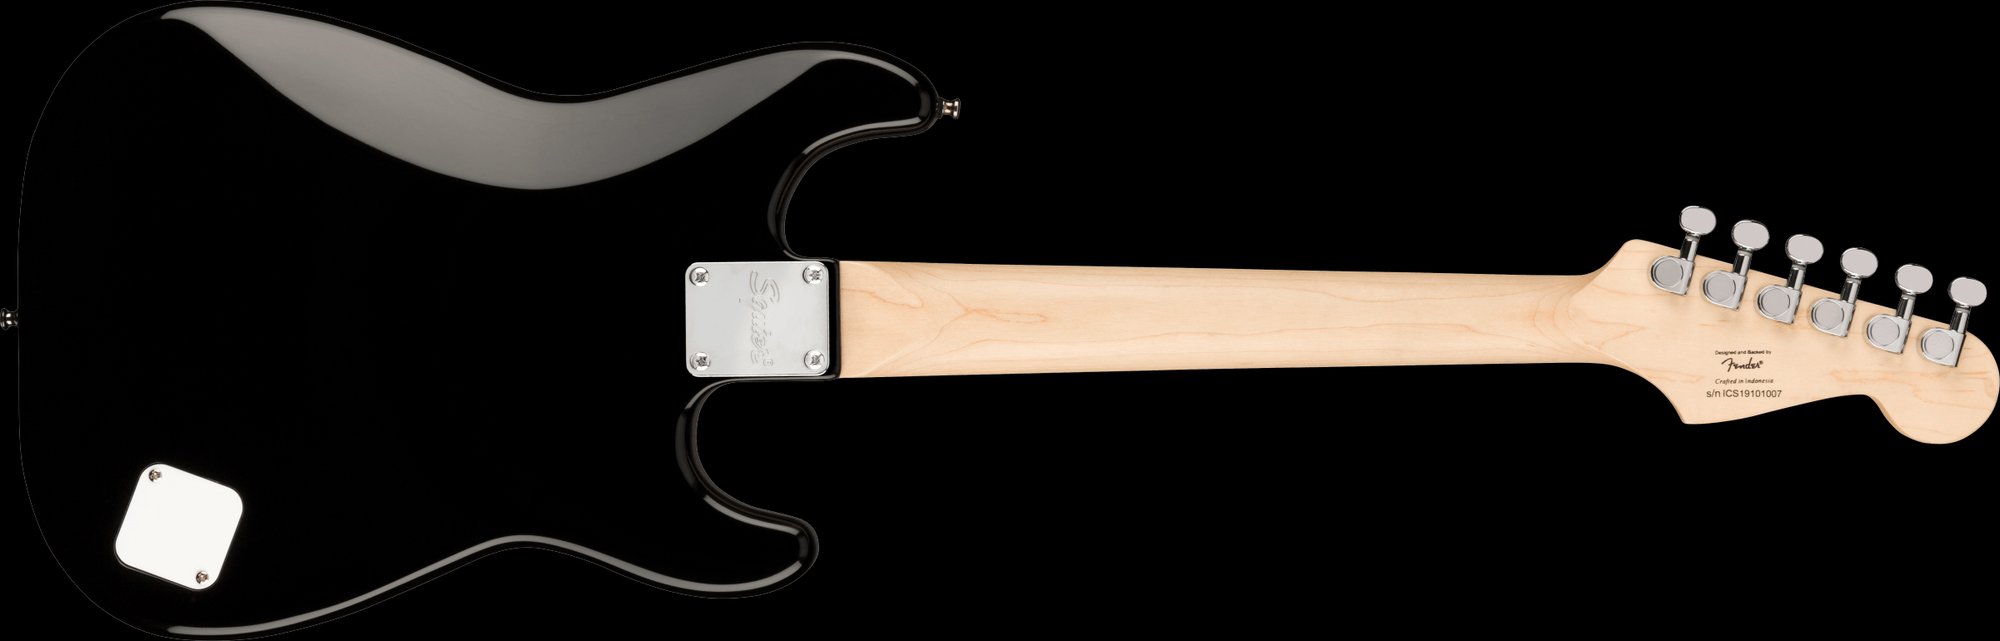 Squier Mini Stratocaster Left-Handed Laurel Fingerboard Black Electric Guitar